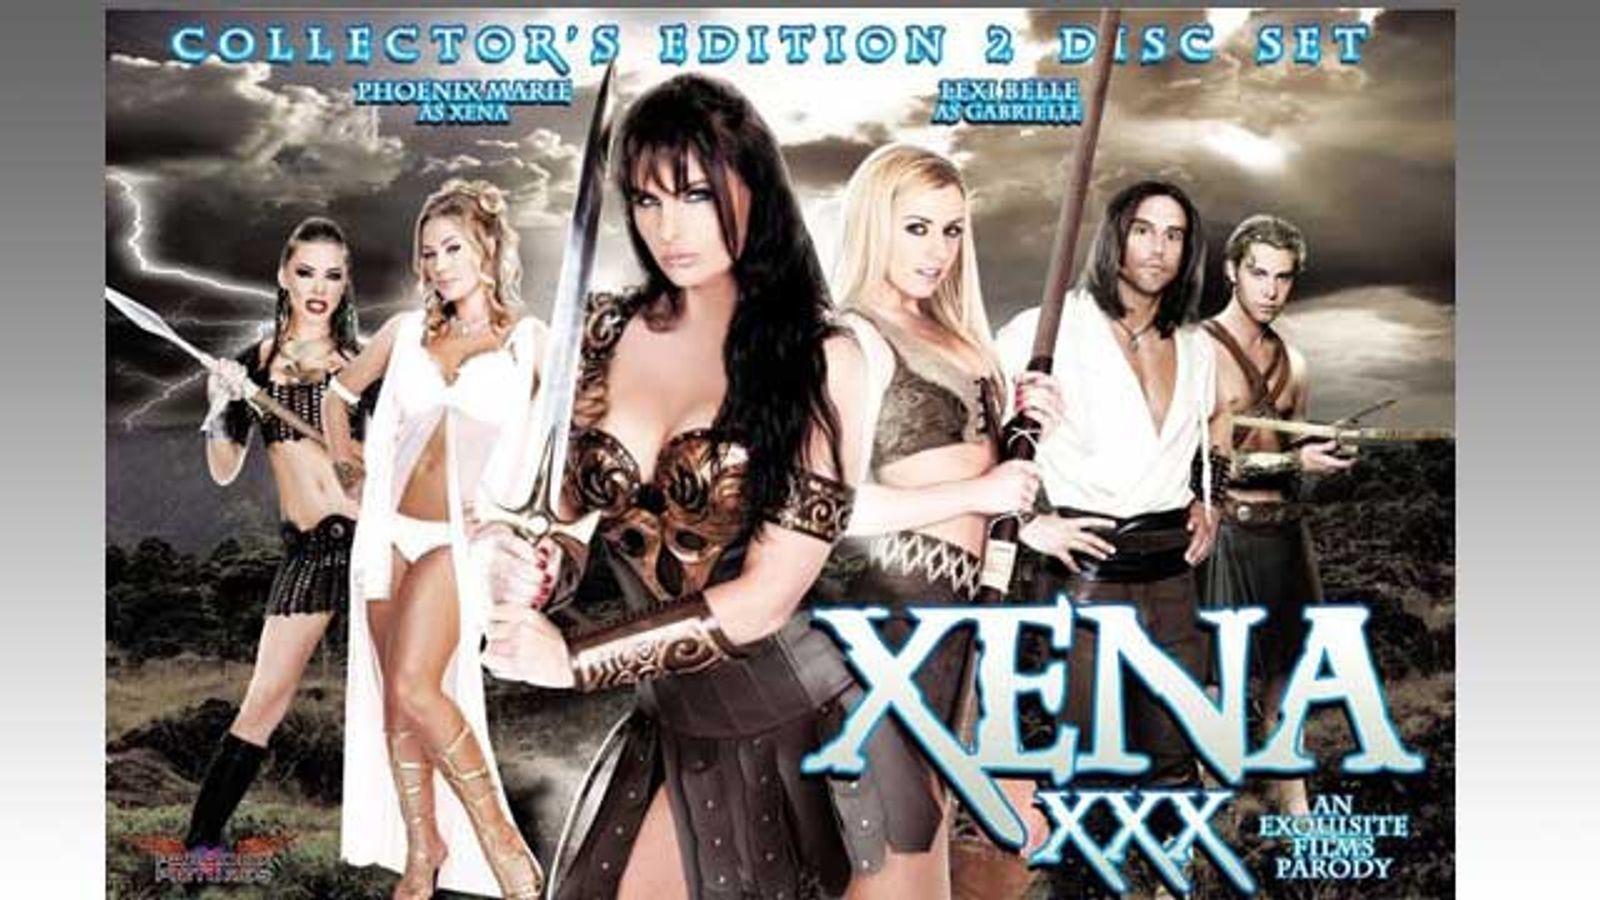 'Xena XXX: An Exquisite Films Parody' NSFW Trailer Debuts